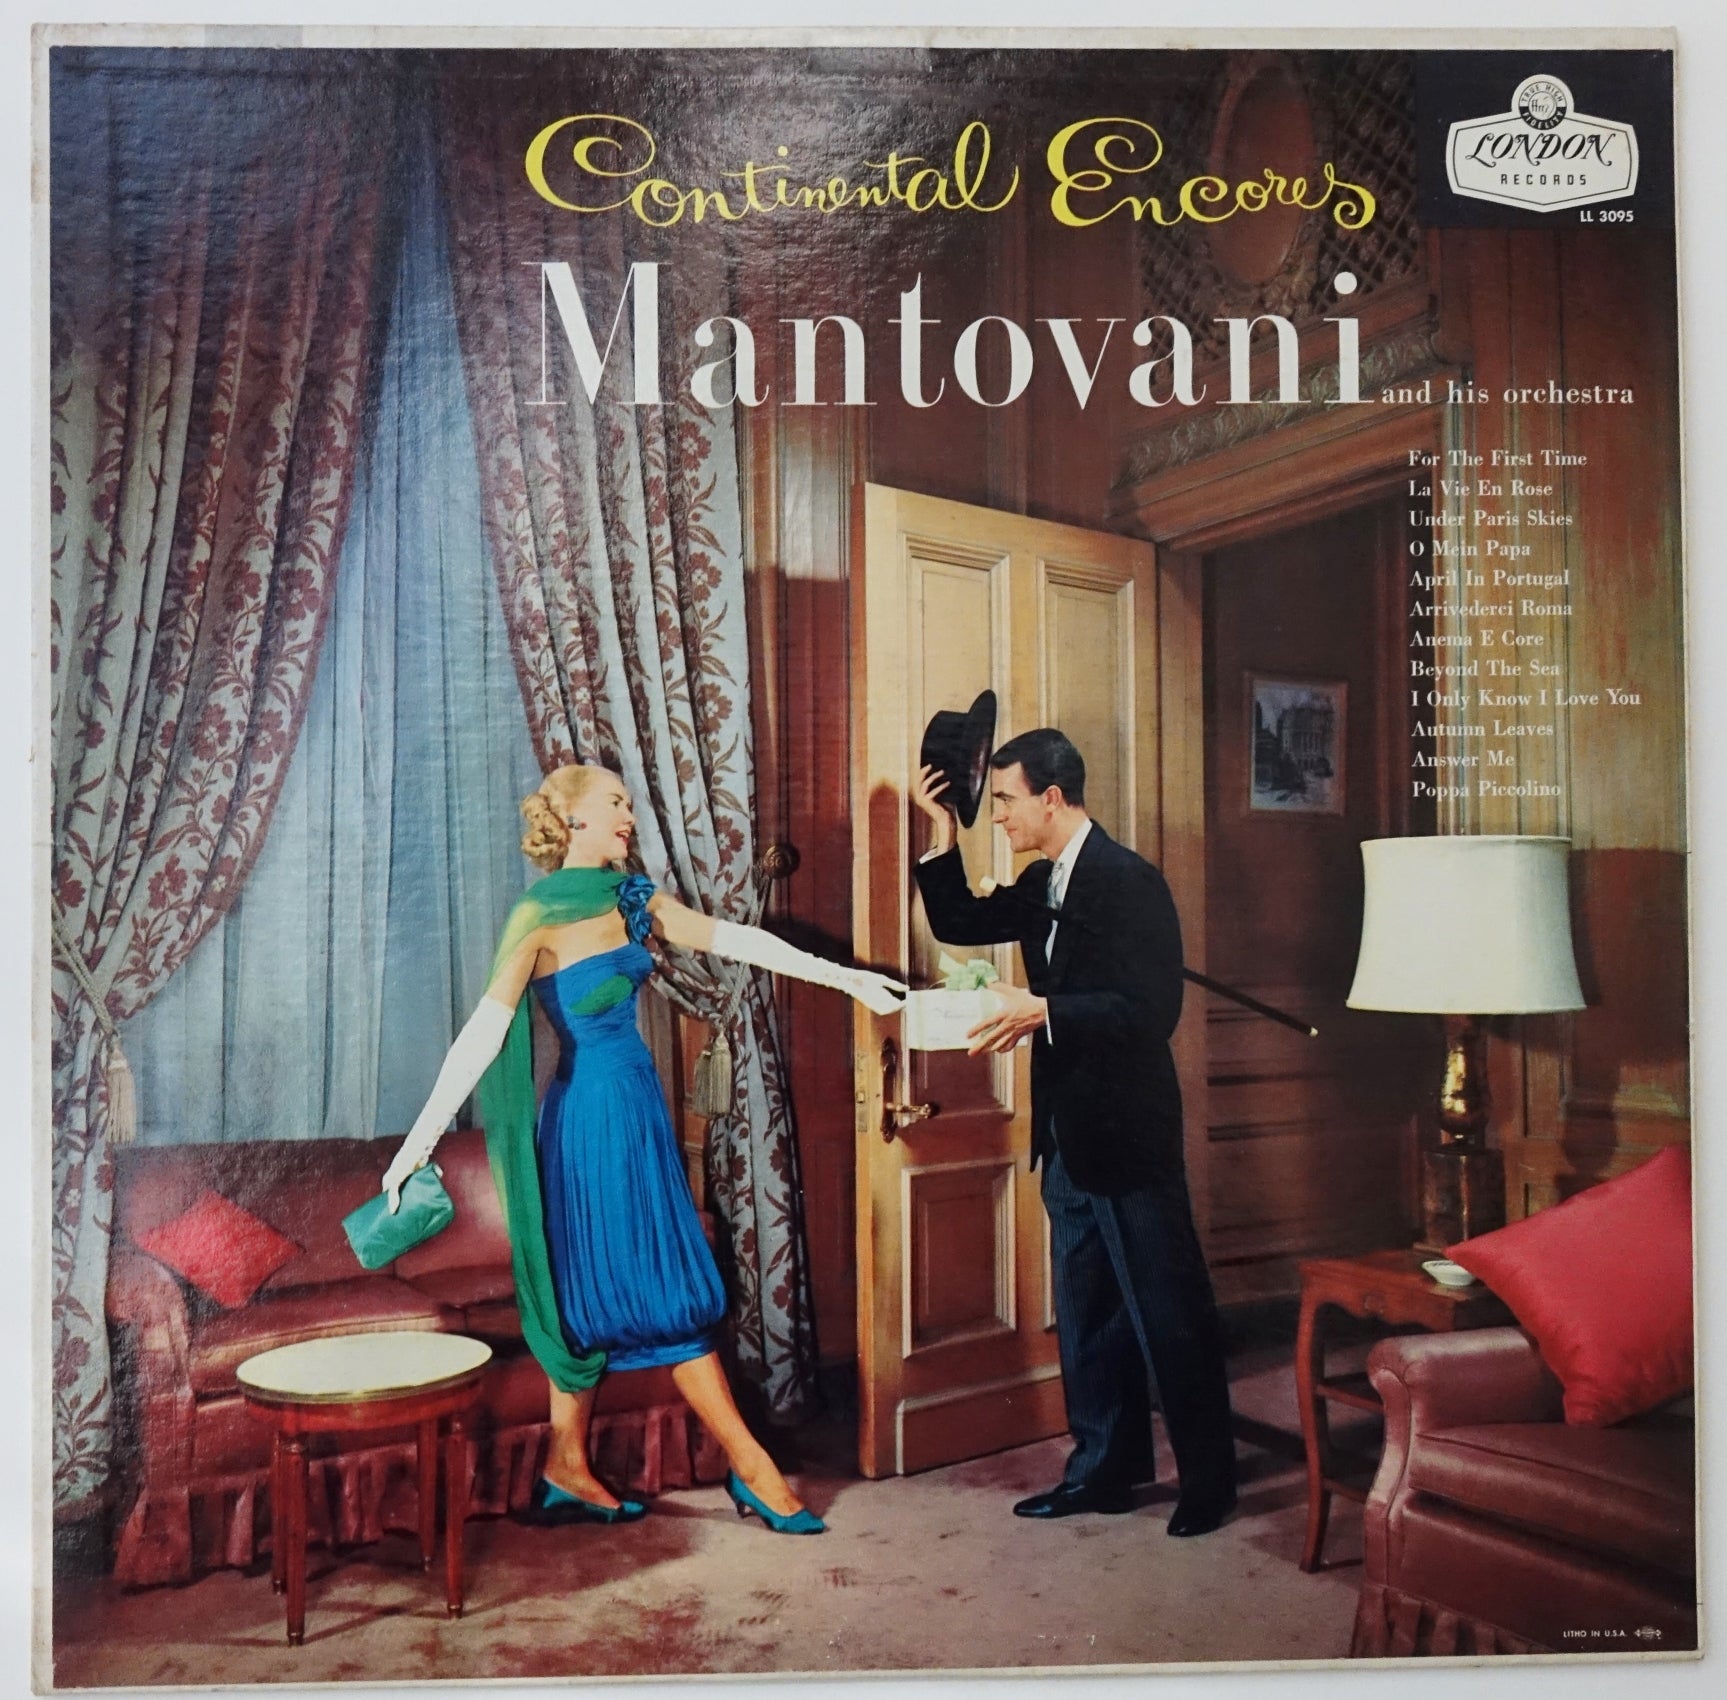 LON012: Mantovani: Continental Encores